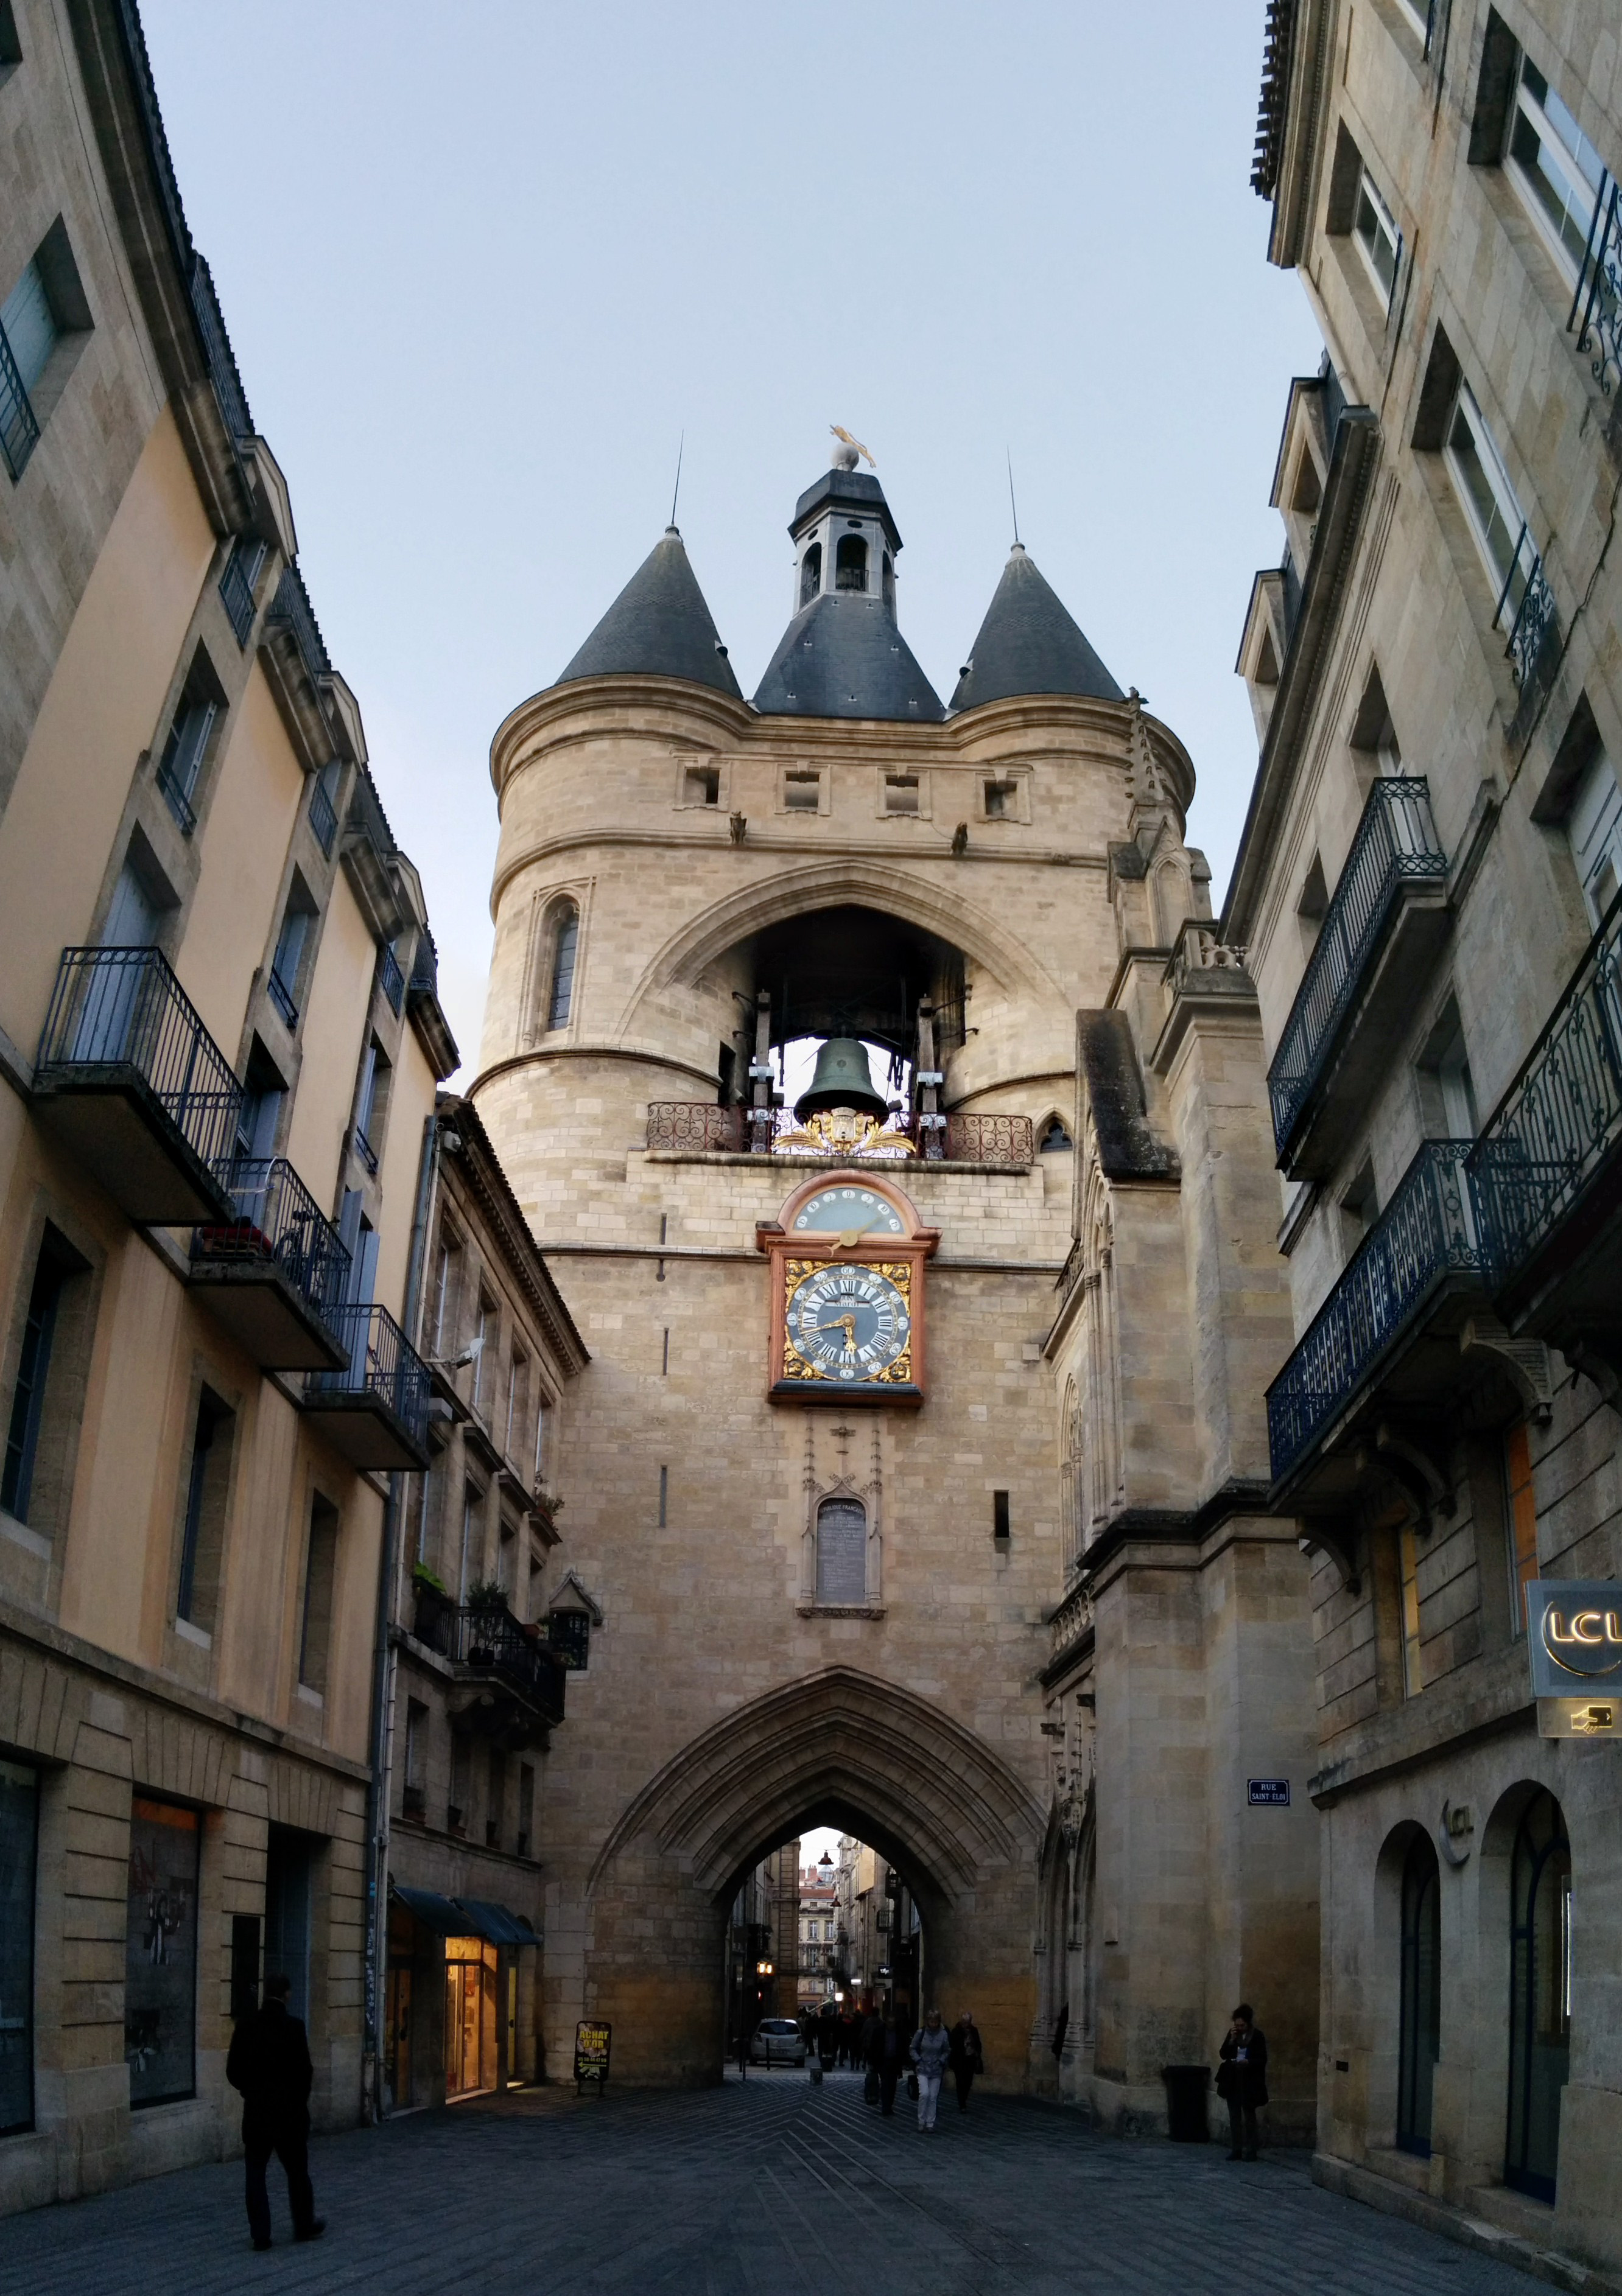 Saint-Eloi gate and the Grosse Cloche